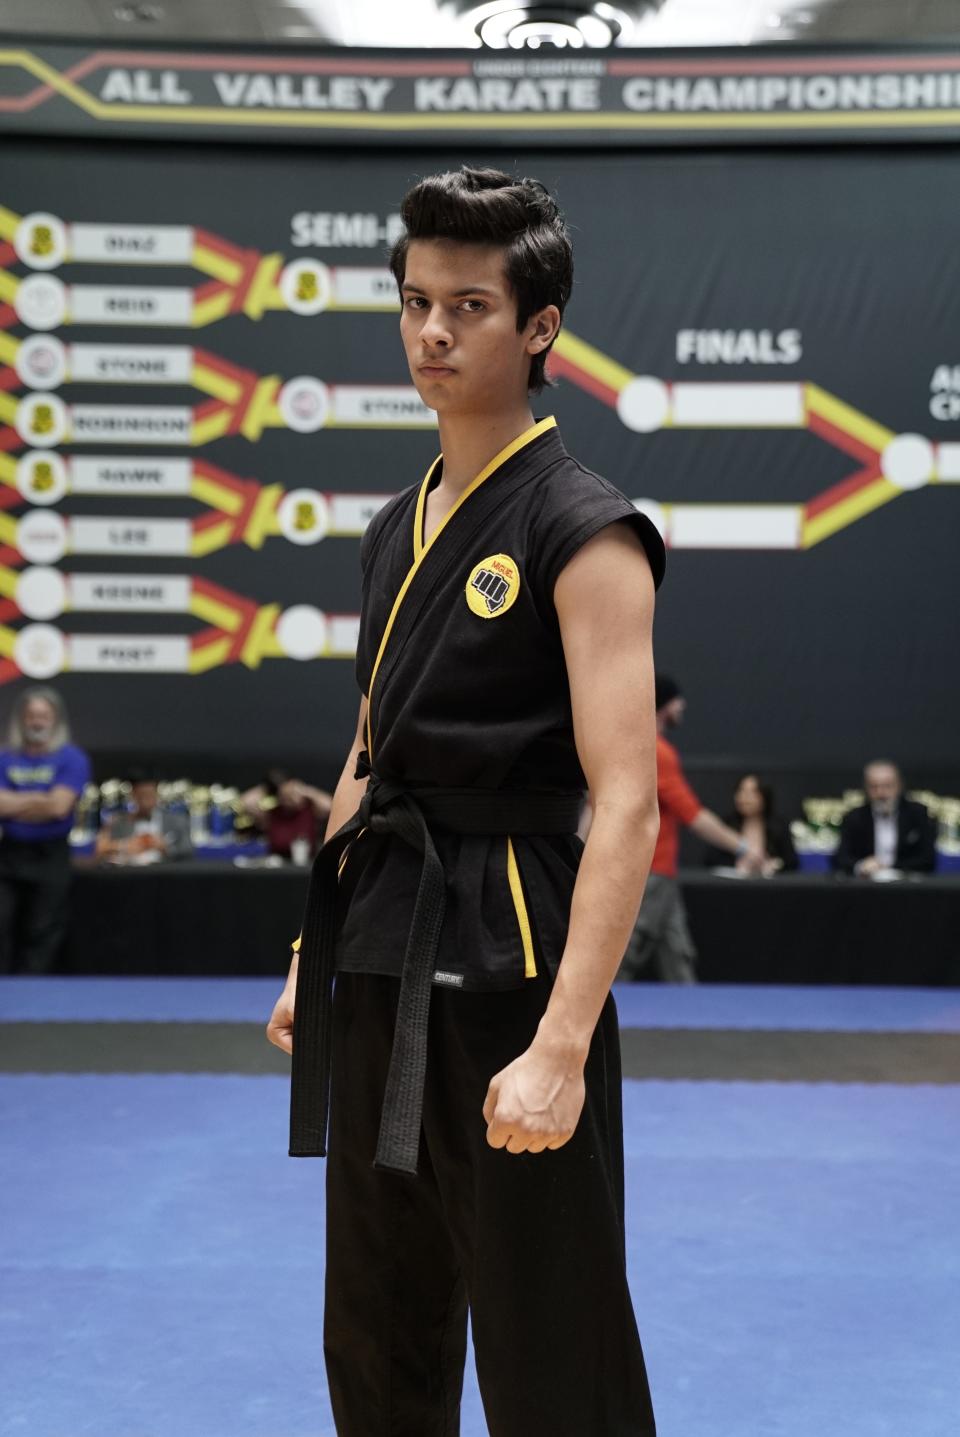 Miguel (Xolo Maridueña) won the All Valley Karate Championship in the first season of "Cobra Kai."